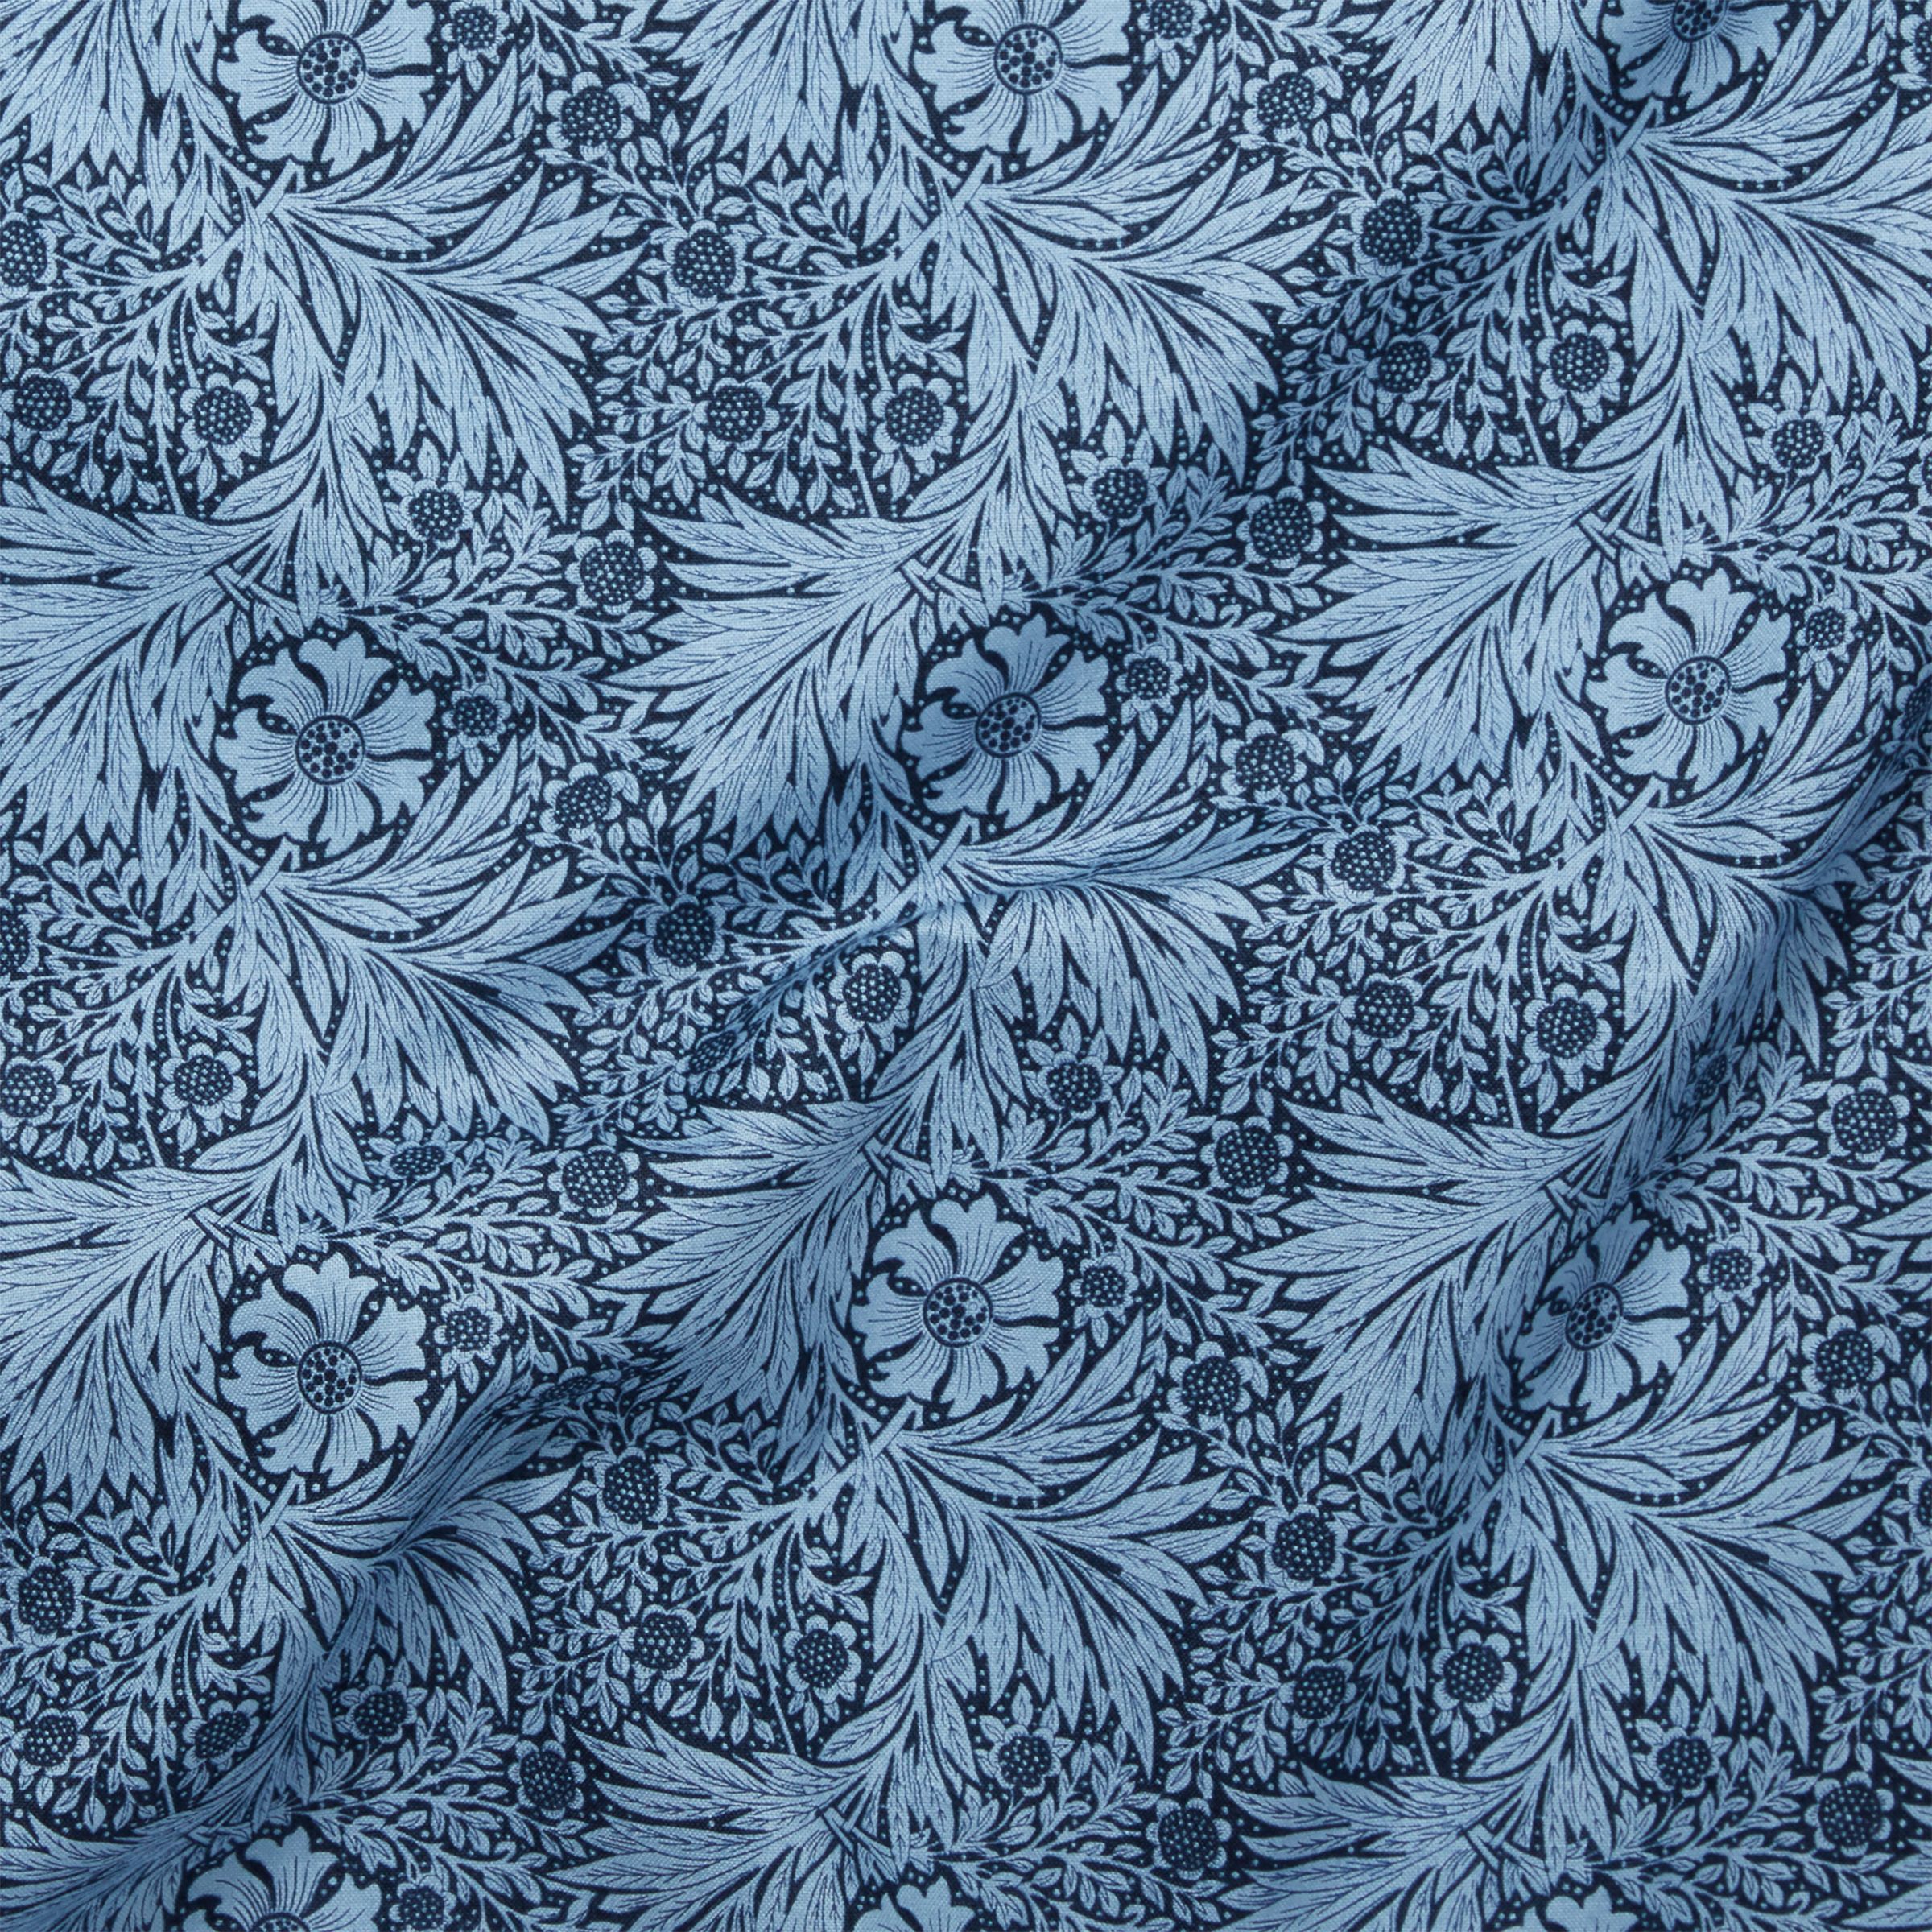 Morris & Co. Marigold Printed Fabric, Navy